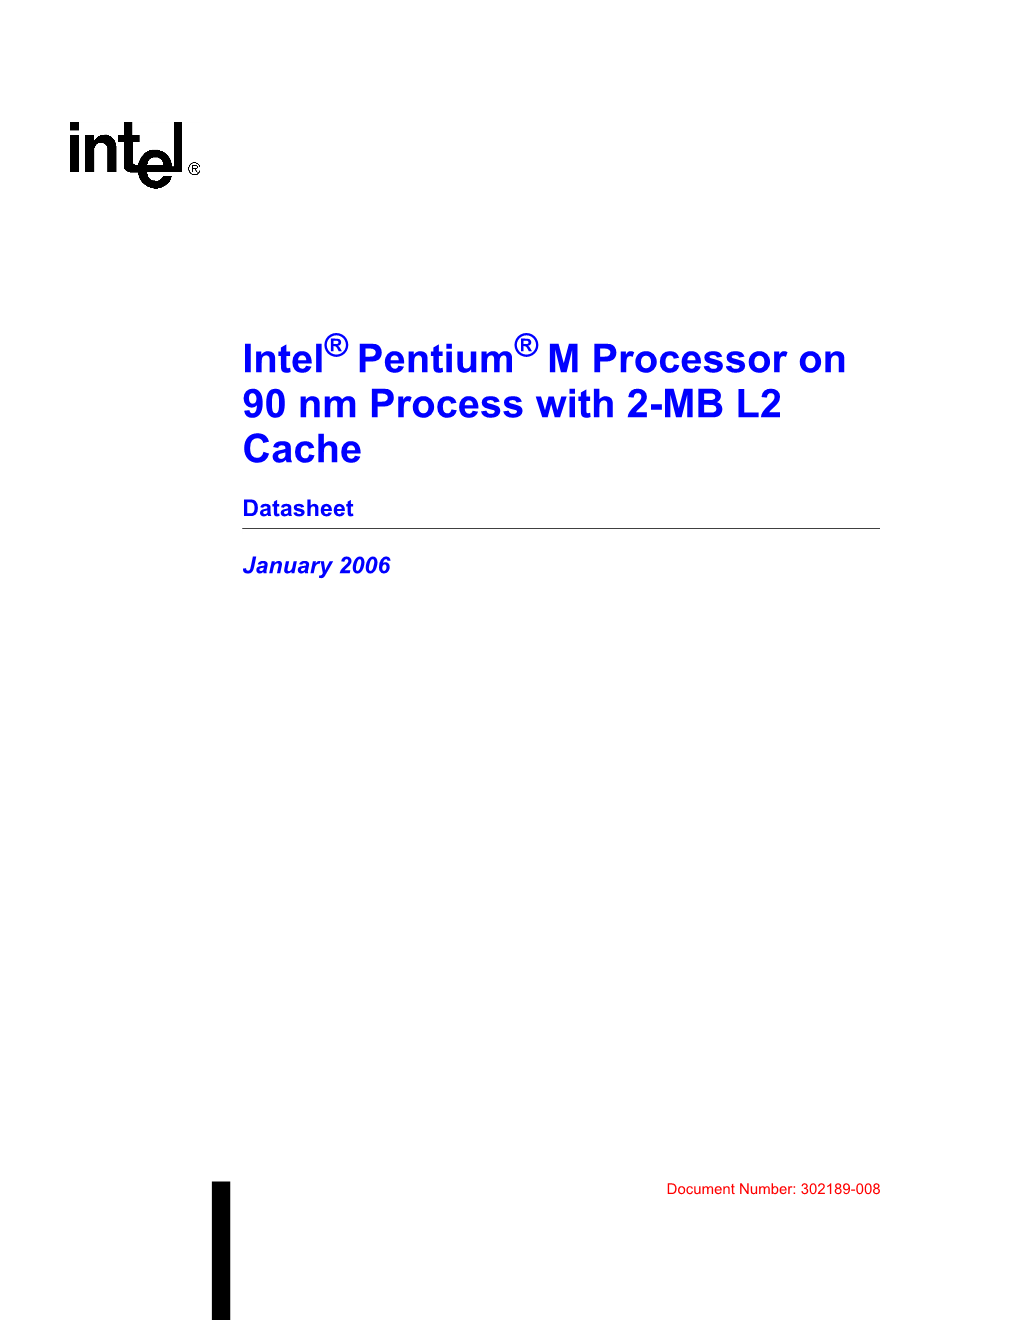 Intel Pentium M Processor on 90 Nm Process with 2-MB L2 Cache